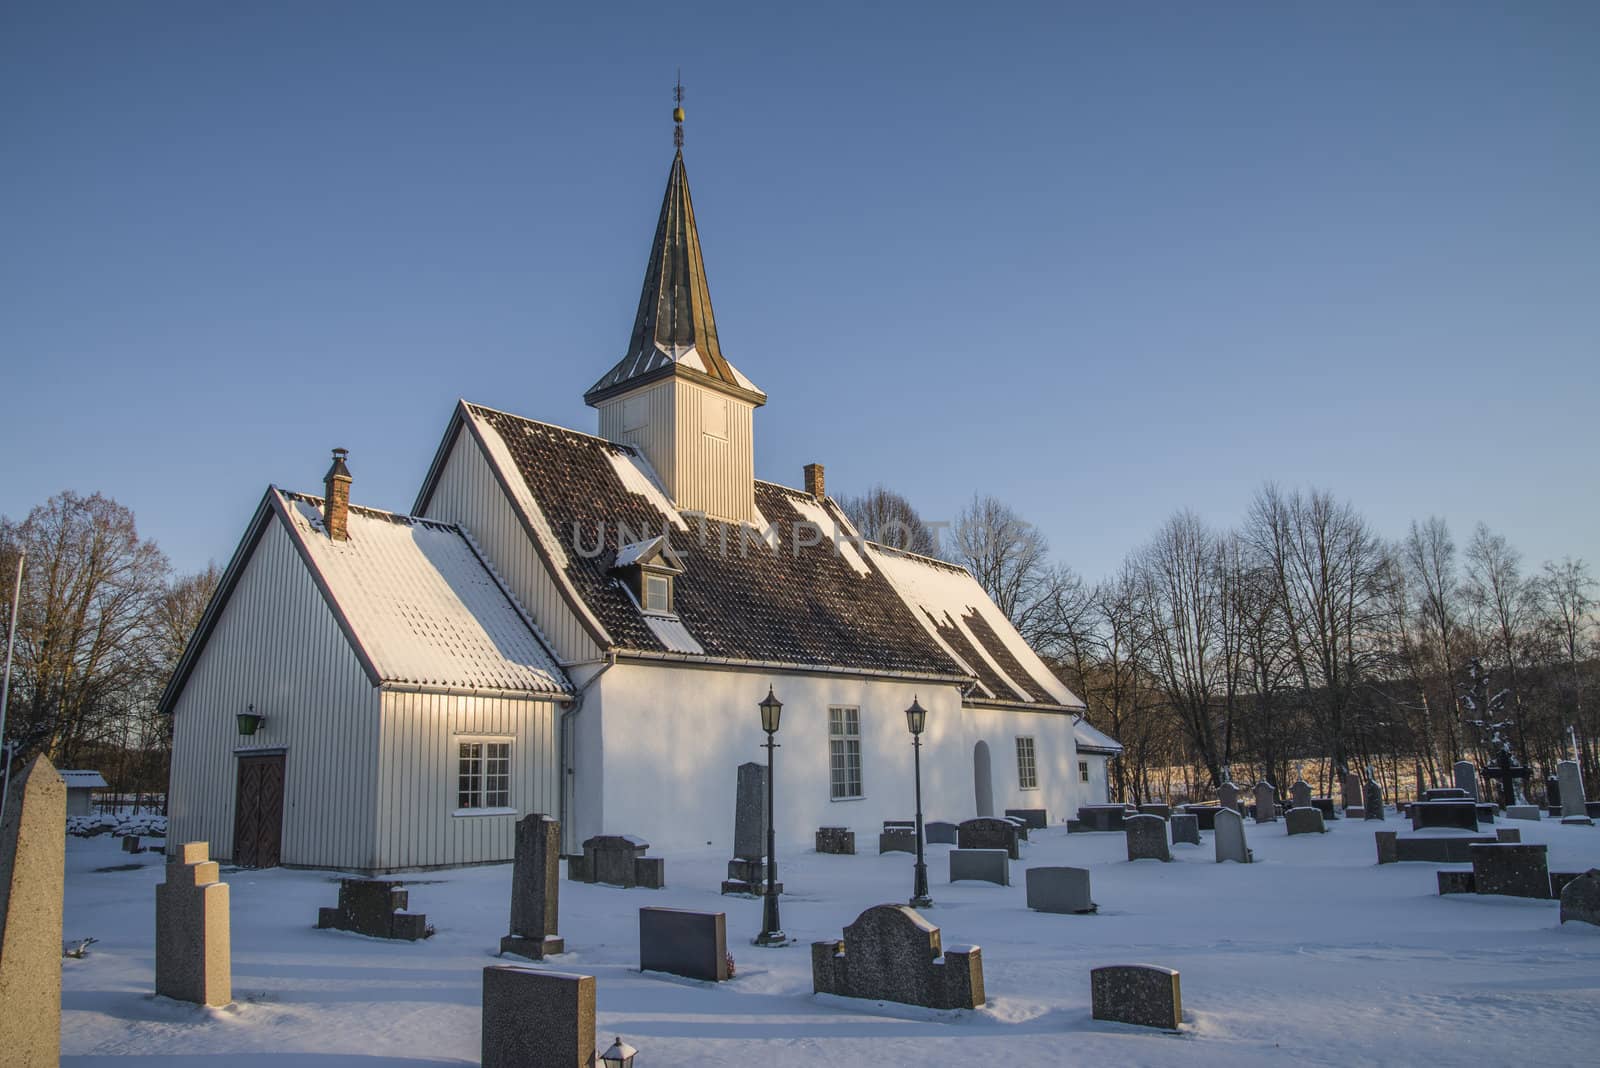 Idd church in winter, southwest by steirus